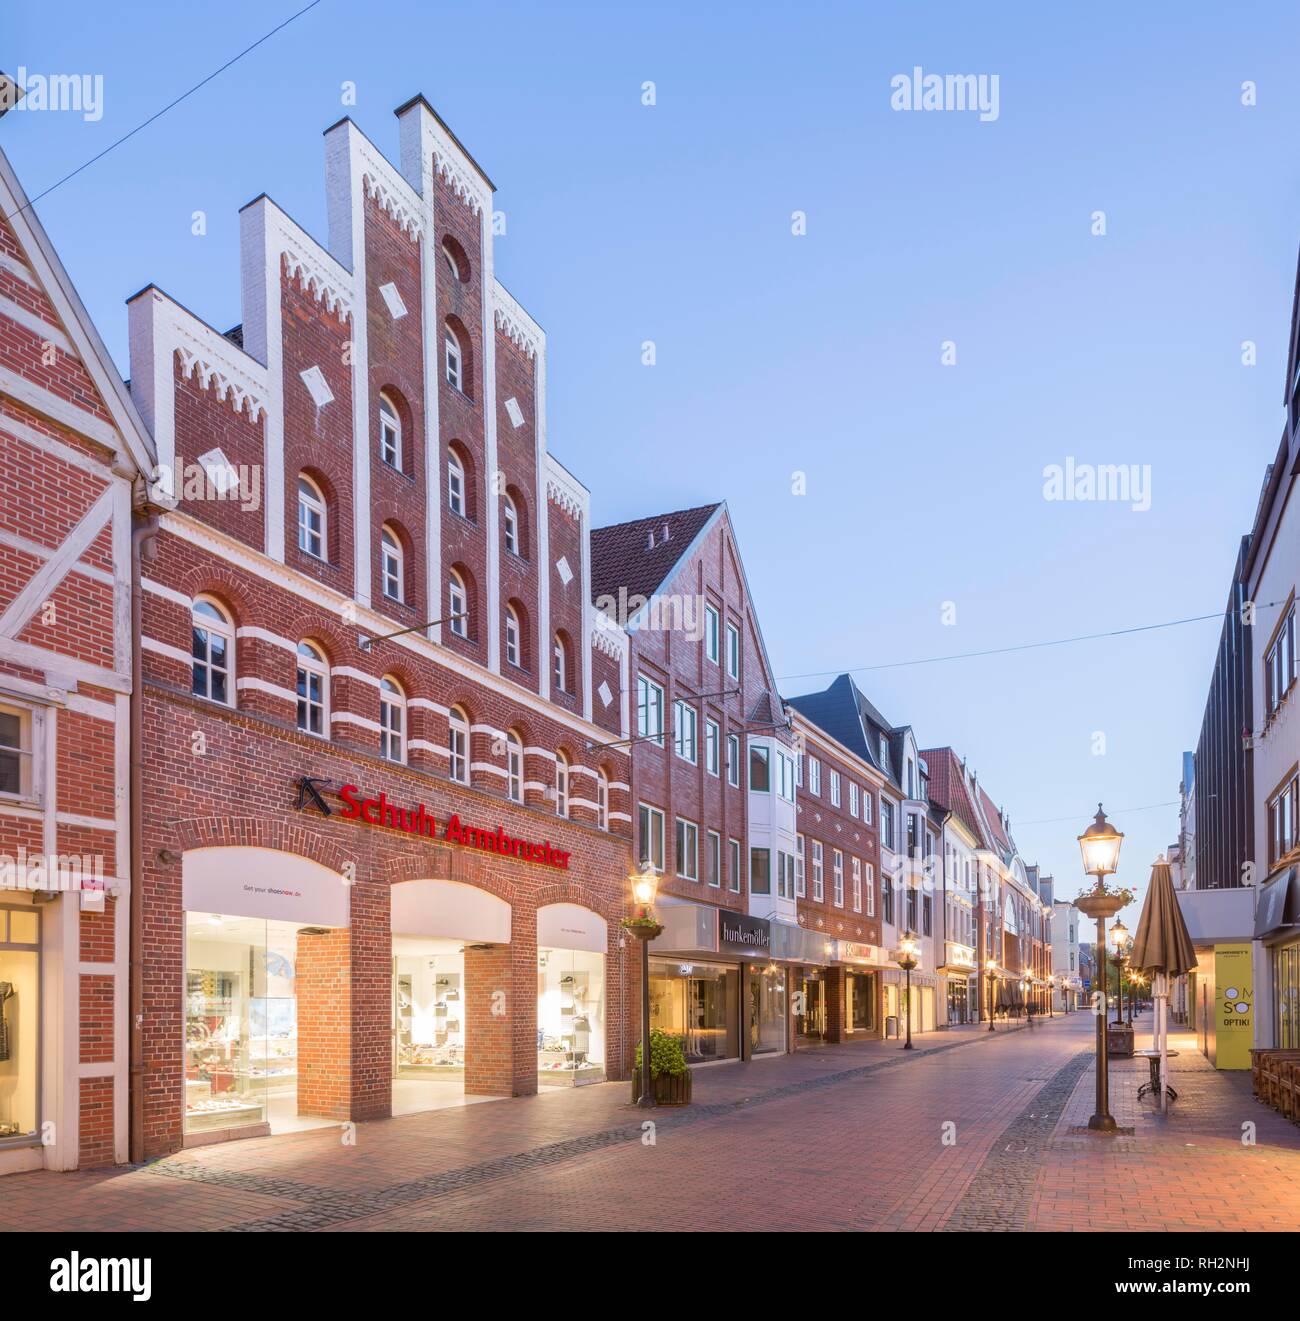 Historische Stadt Haus mit Treppe Giebel, Lange Straße, Altstadt, Buxtehude, Niedersachsen, Deutschland Stockfoto